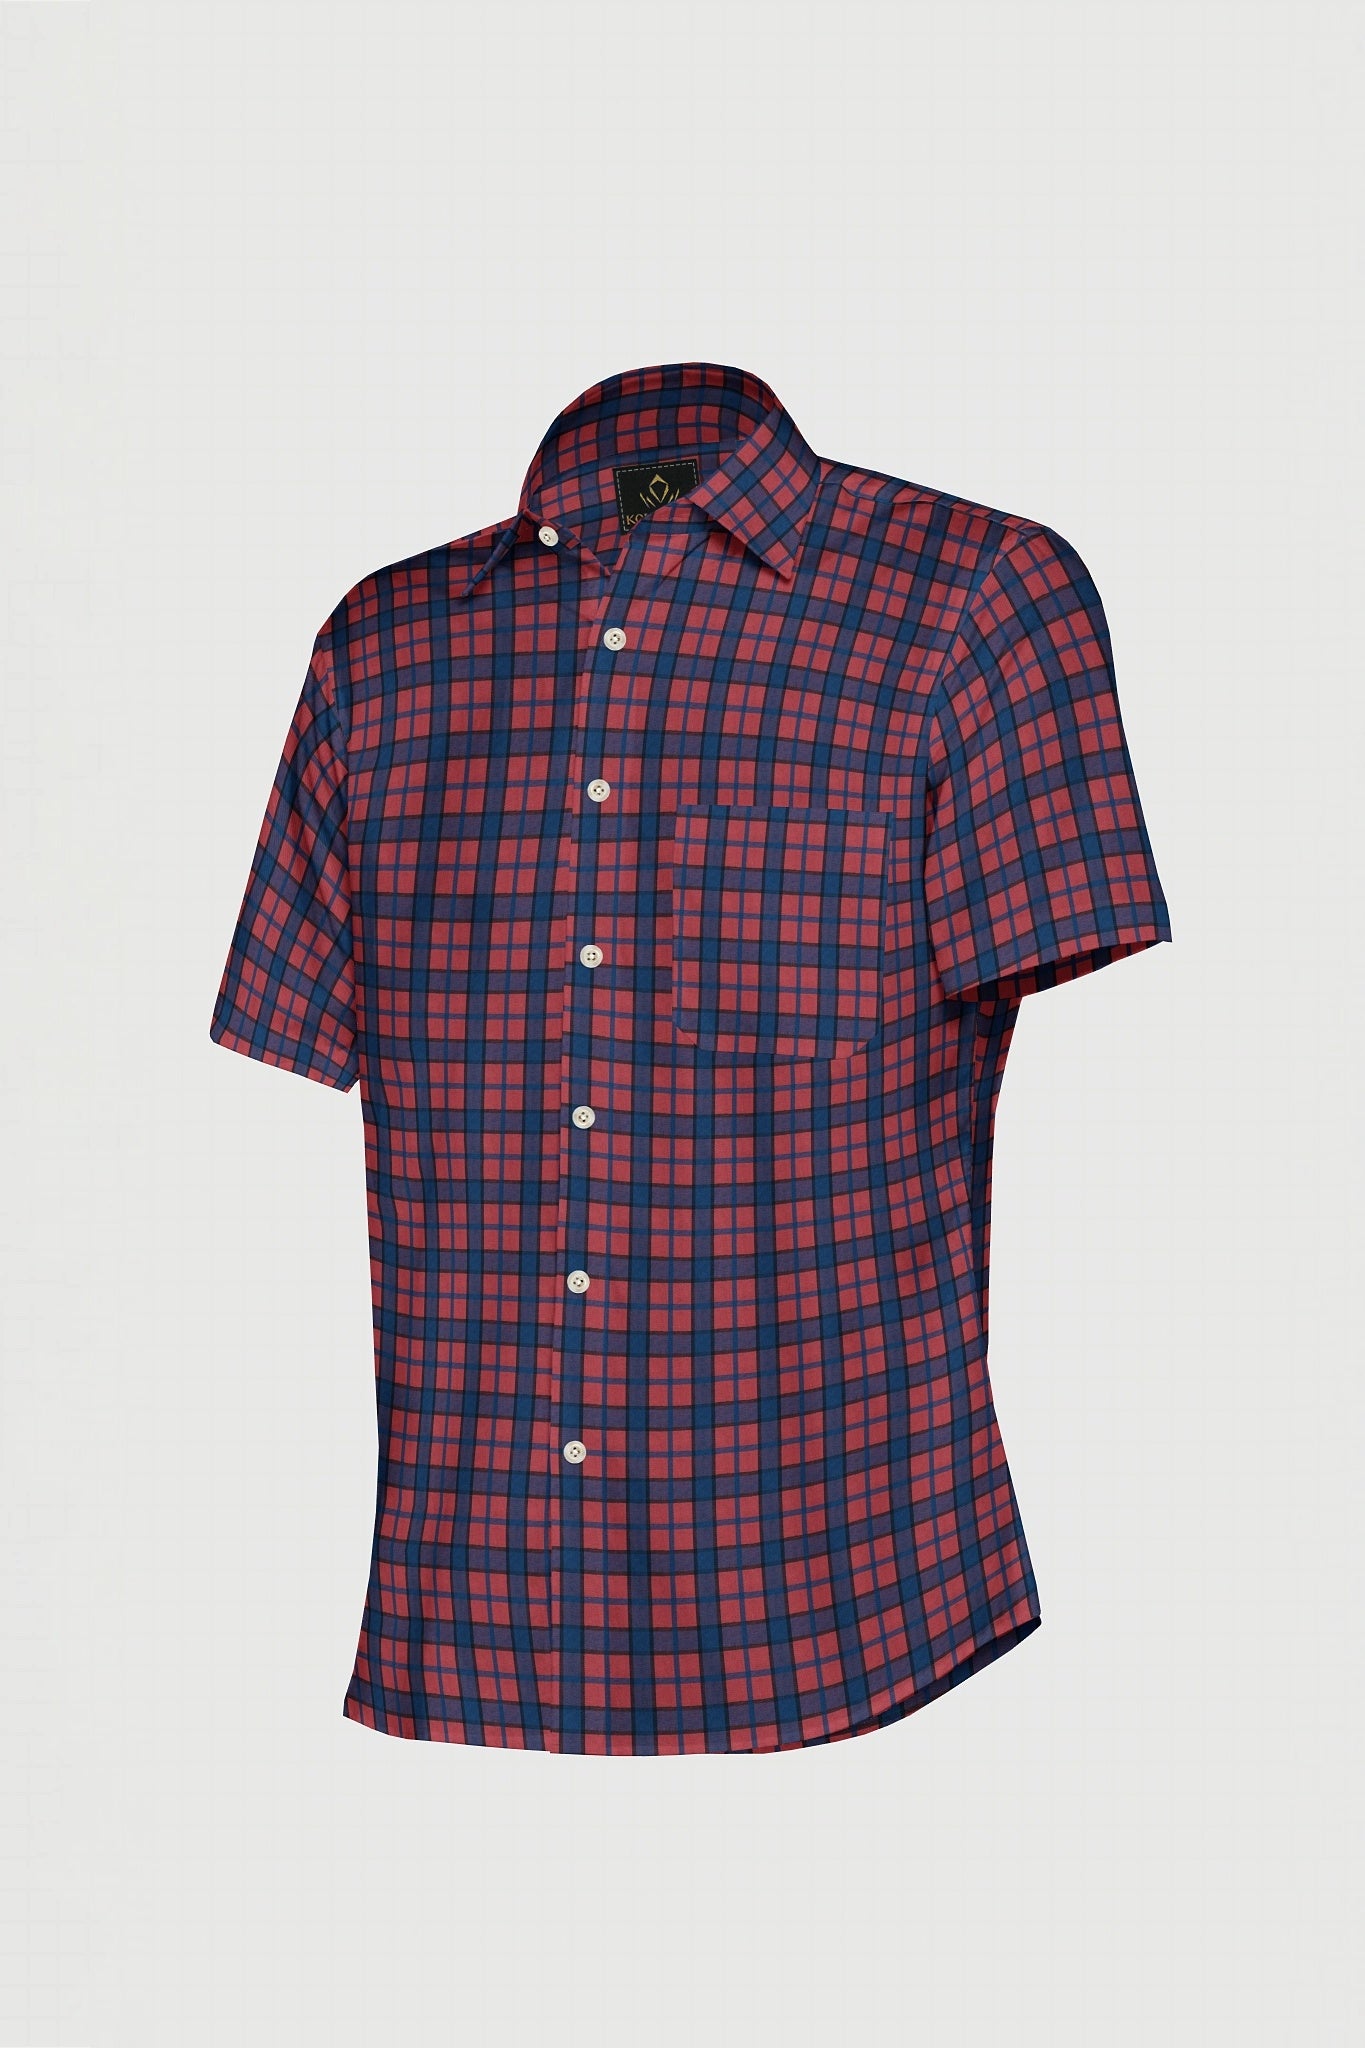 Auburn Red with Cyprus Blue and Royal Blue Checks Premium Cotton Shirt